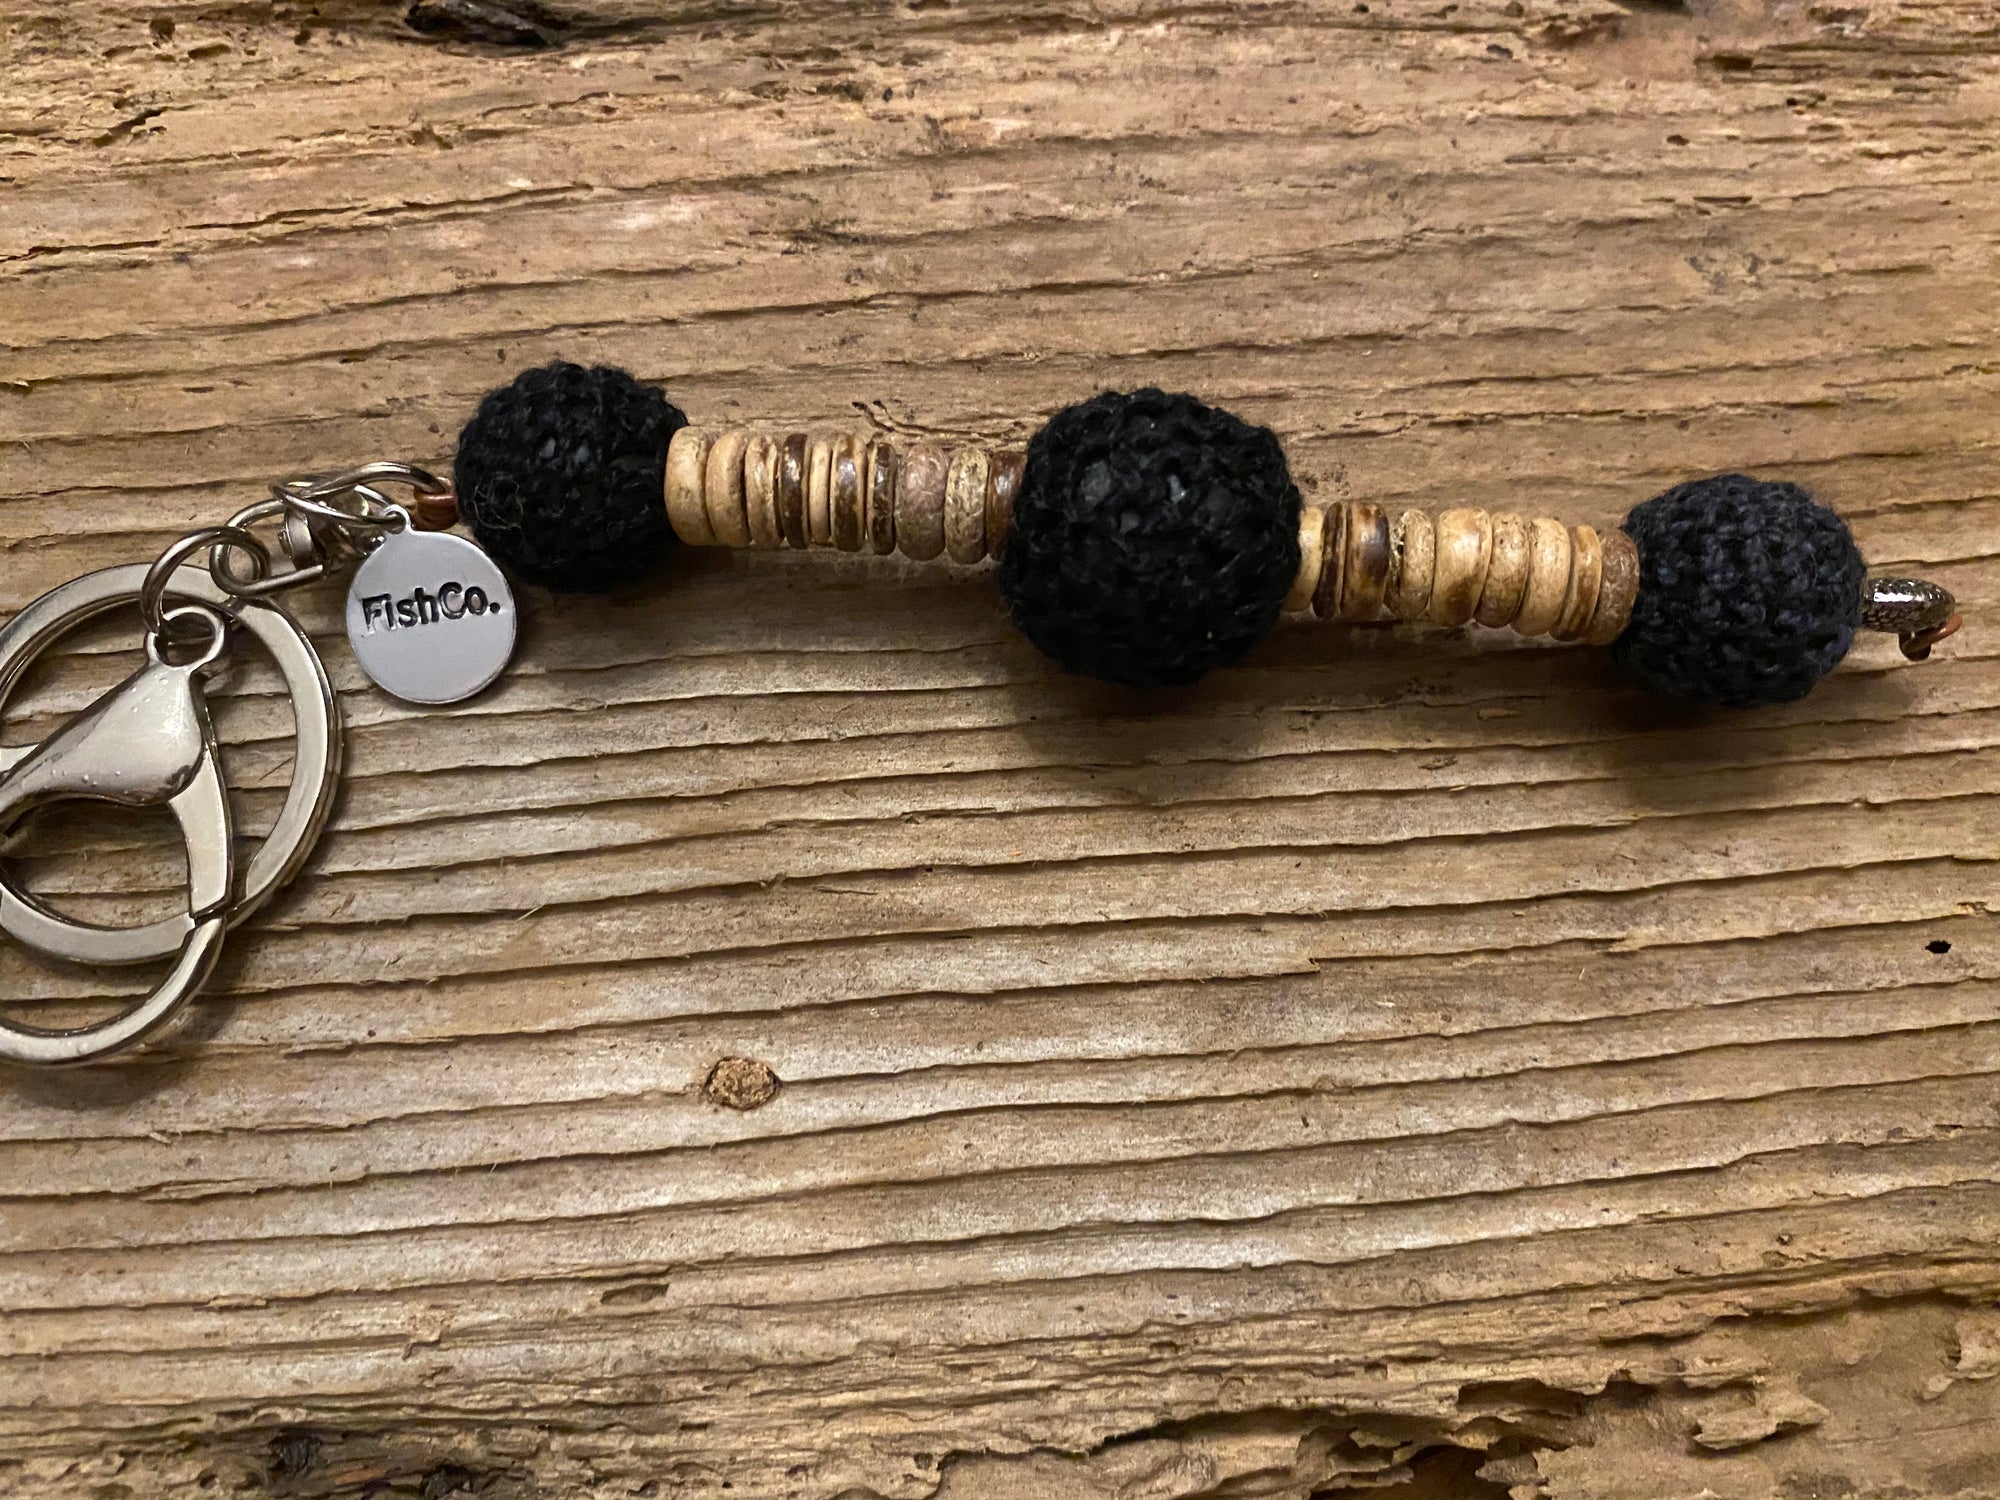 Shanga Keychain black macramé beads with round coconut shell bead accents